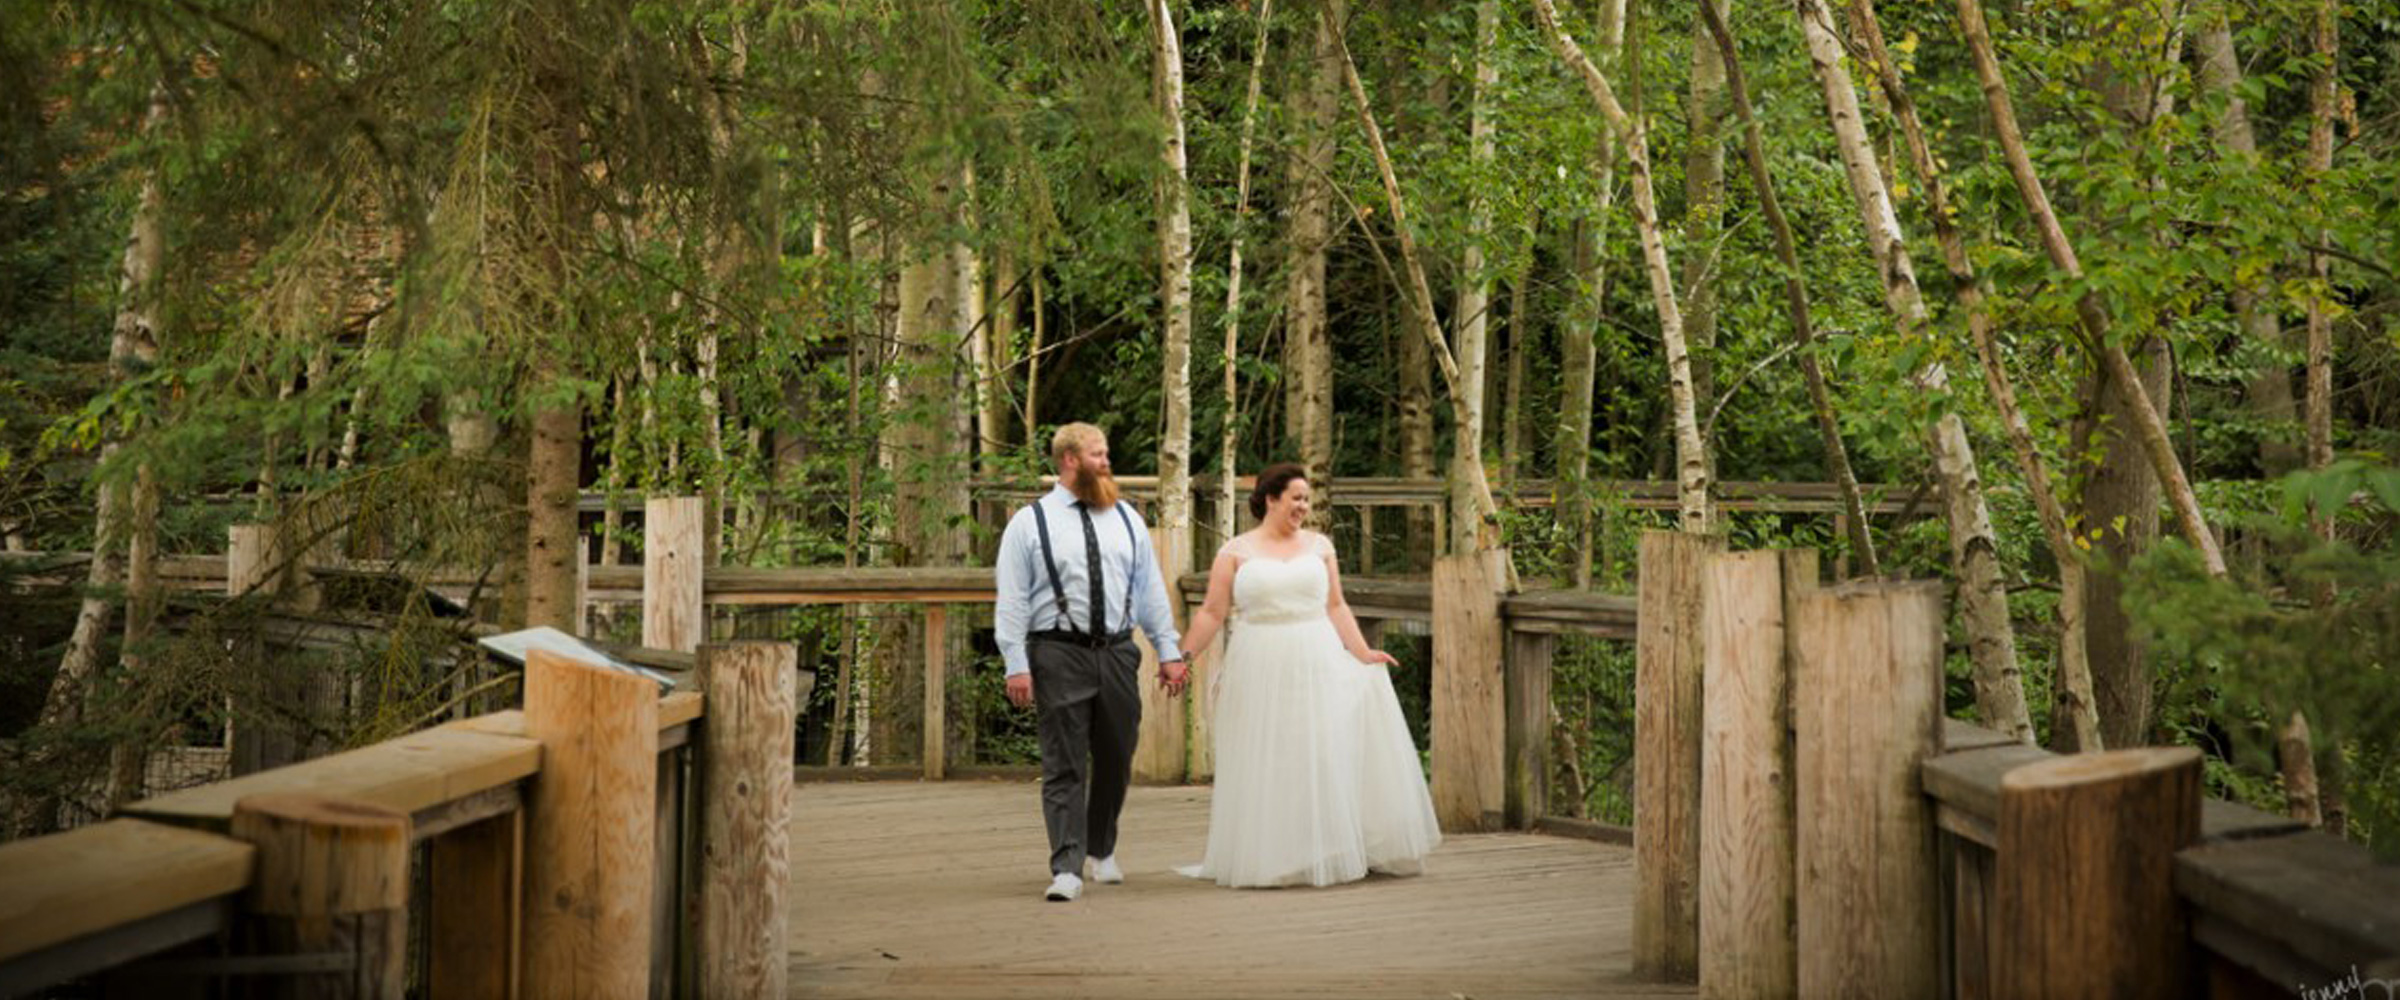 Desktop Wedding Venues Slide 8 - Bramble & Wood Events at Woodland Park Zoo